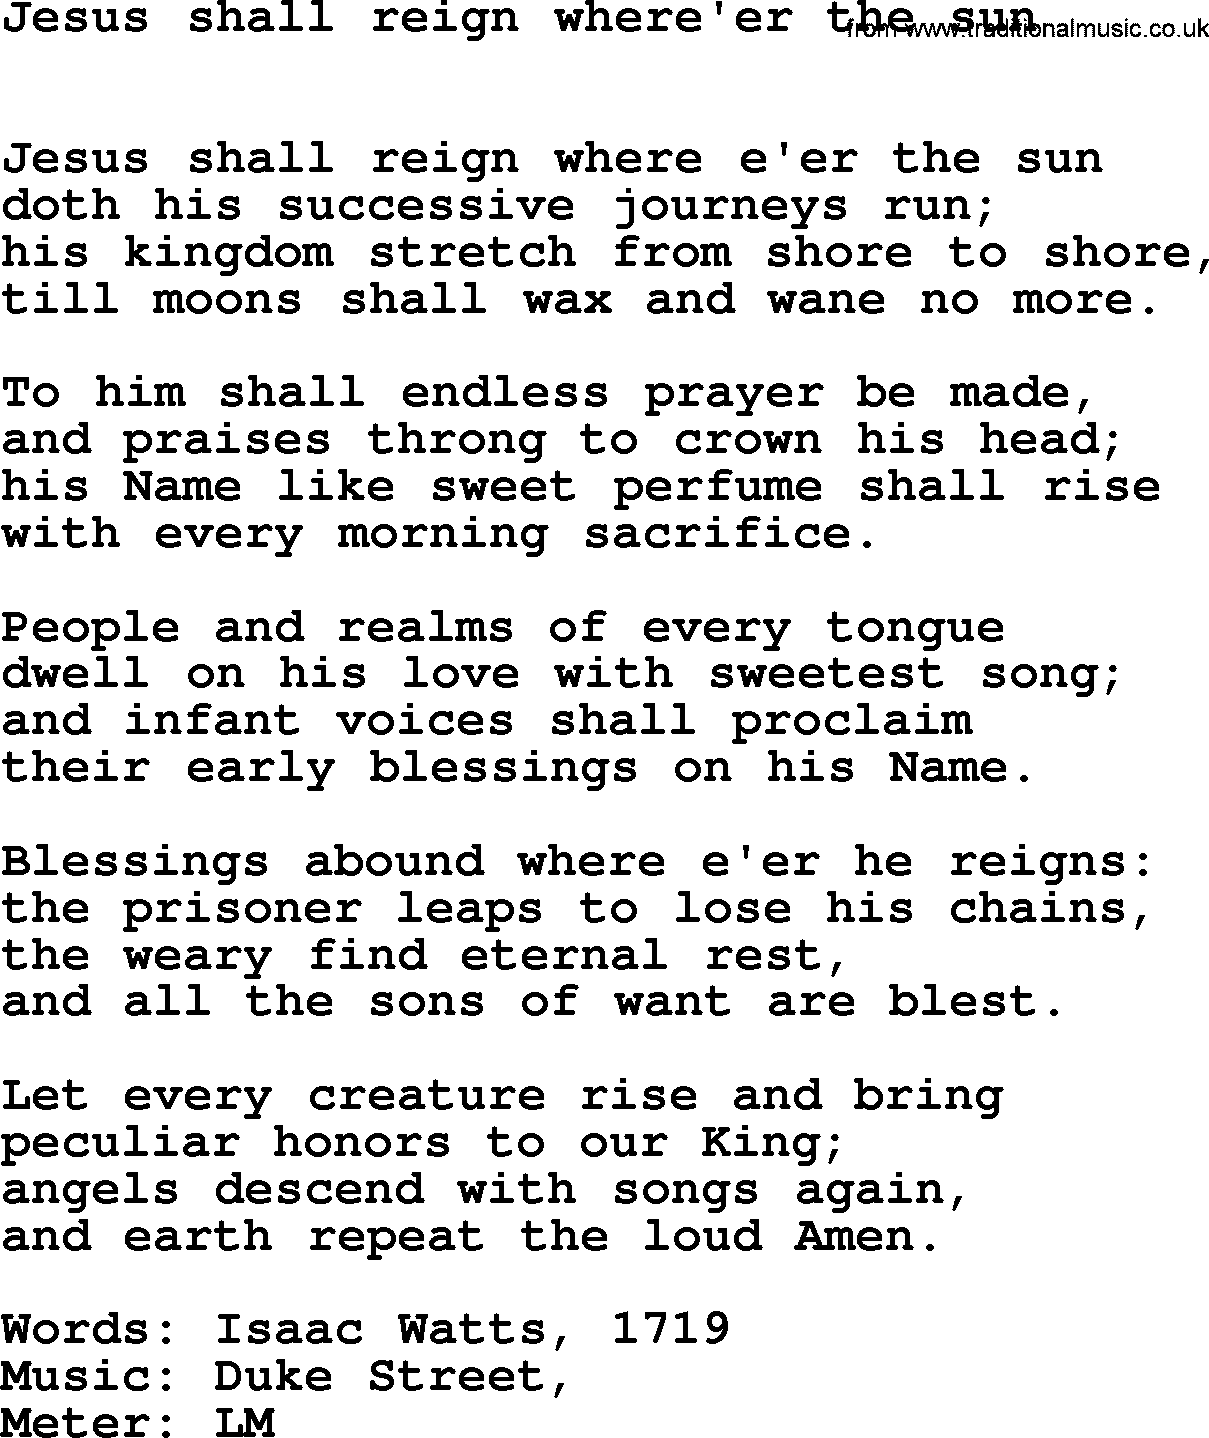 Book of Common Praise Hymn: Jesus Shall Reign Where'er The Sun.txt lyrics with midi music